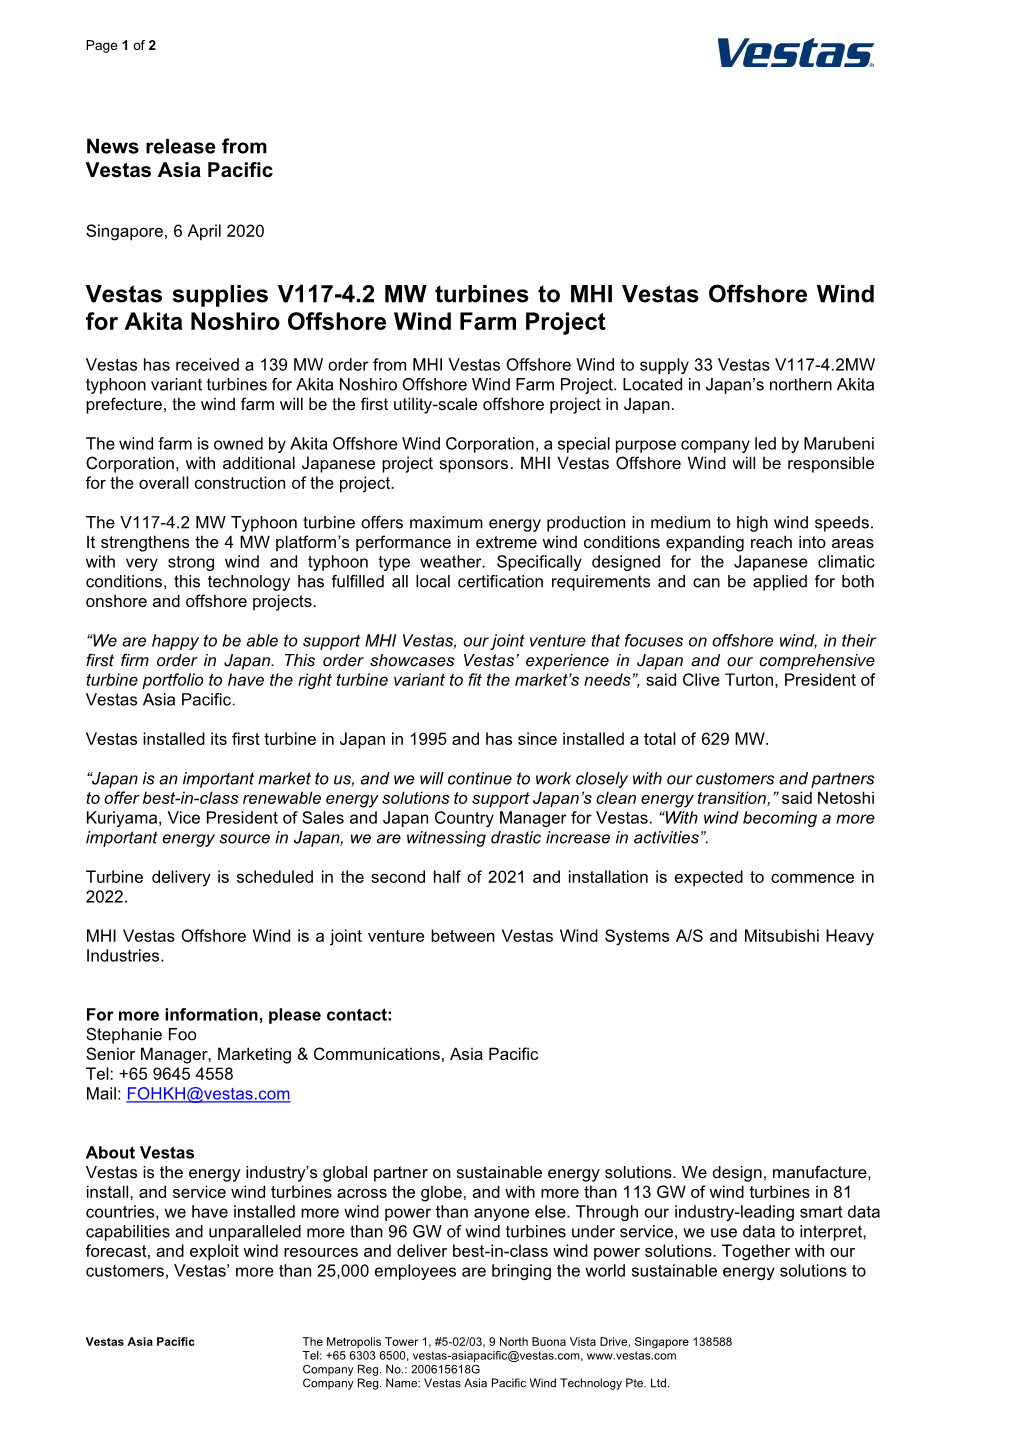 Vestas Supplies V117-4.2 MW Turbines to MHI Vestas Offshore Wind for Akita Noshiro Offshore Wind Farm Project